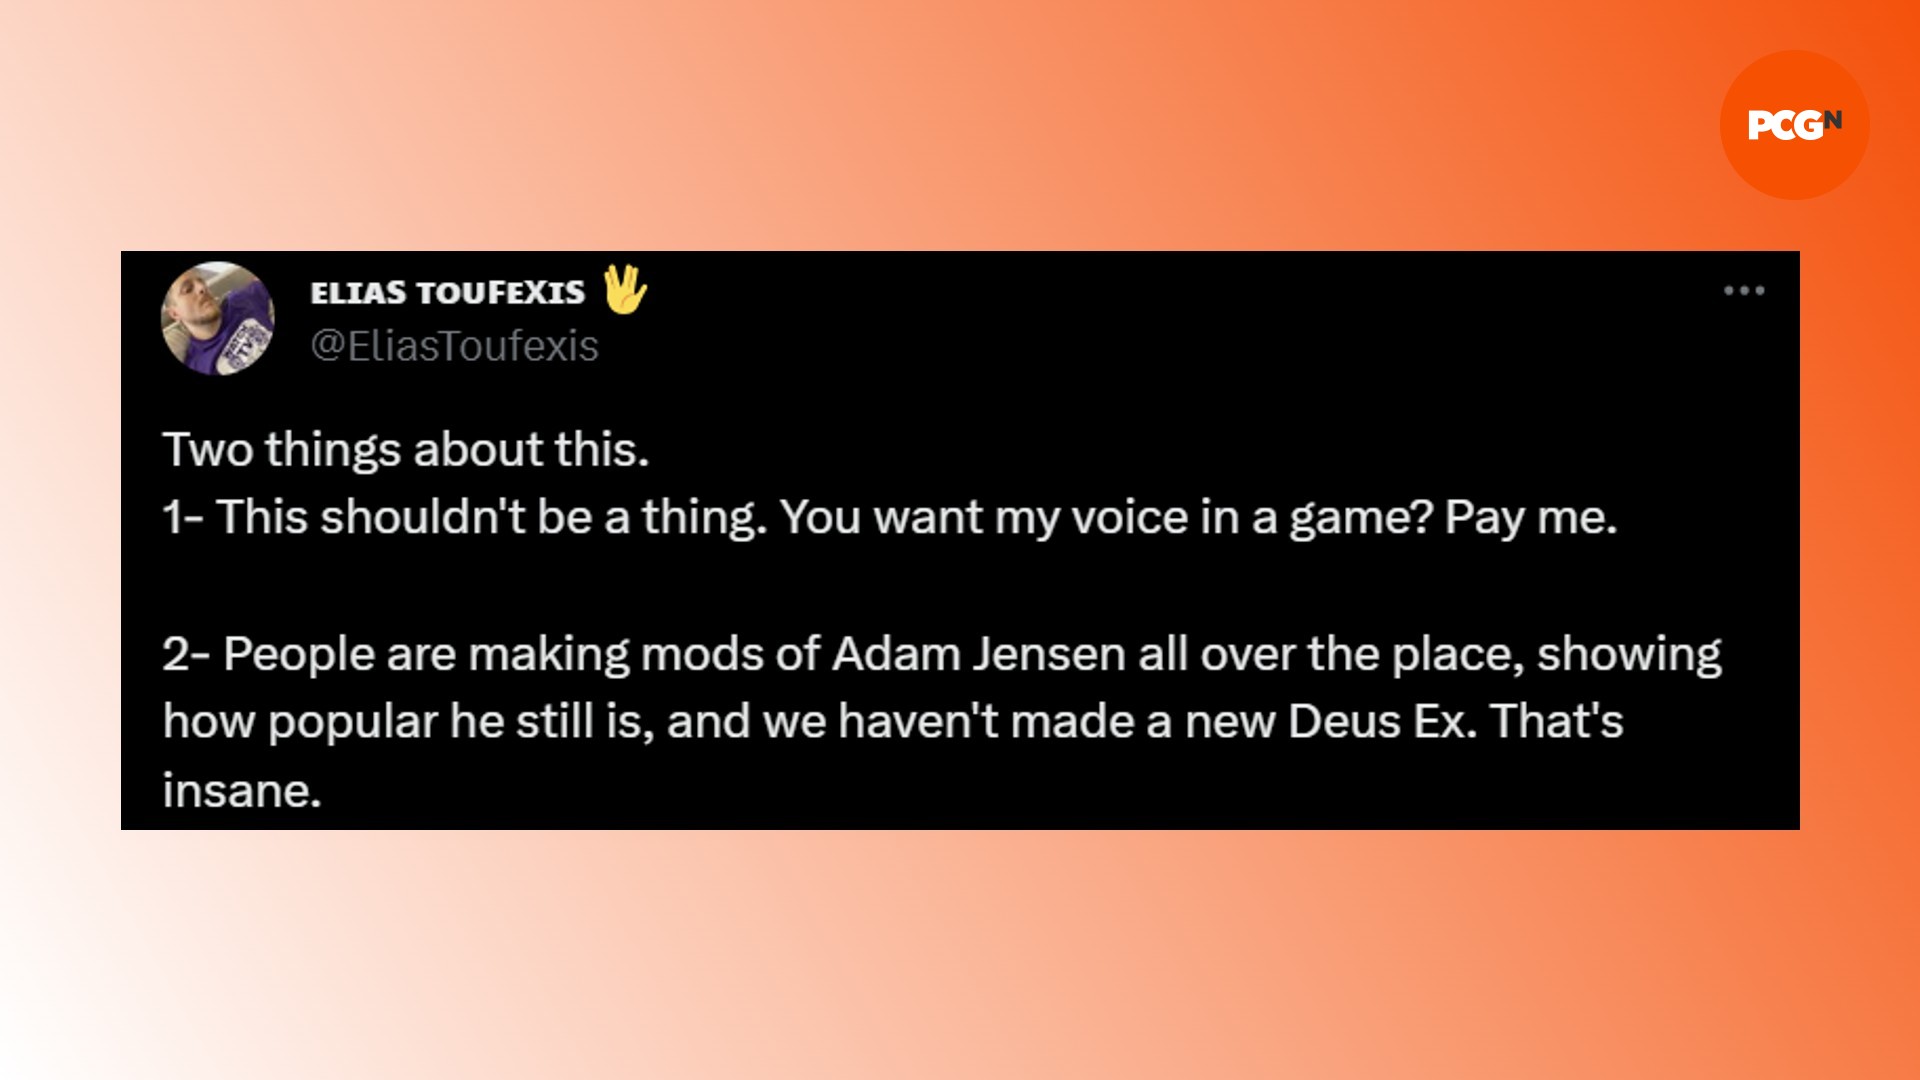 New Deus Ex game: A tweet from Adam Jensen actor Elias Toufexis regarding a new Deus Ex game